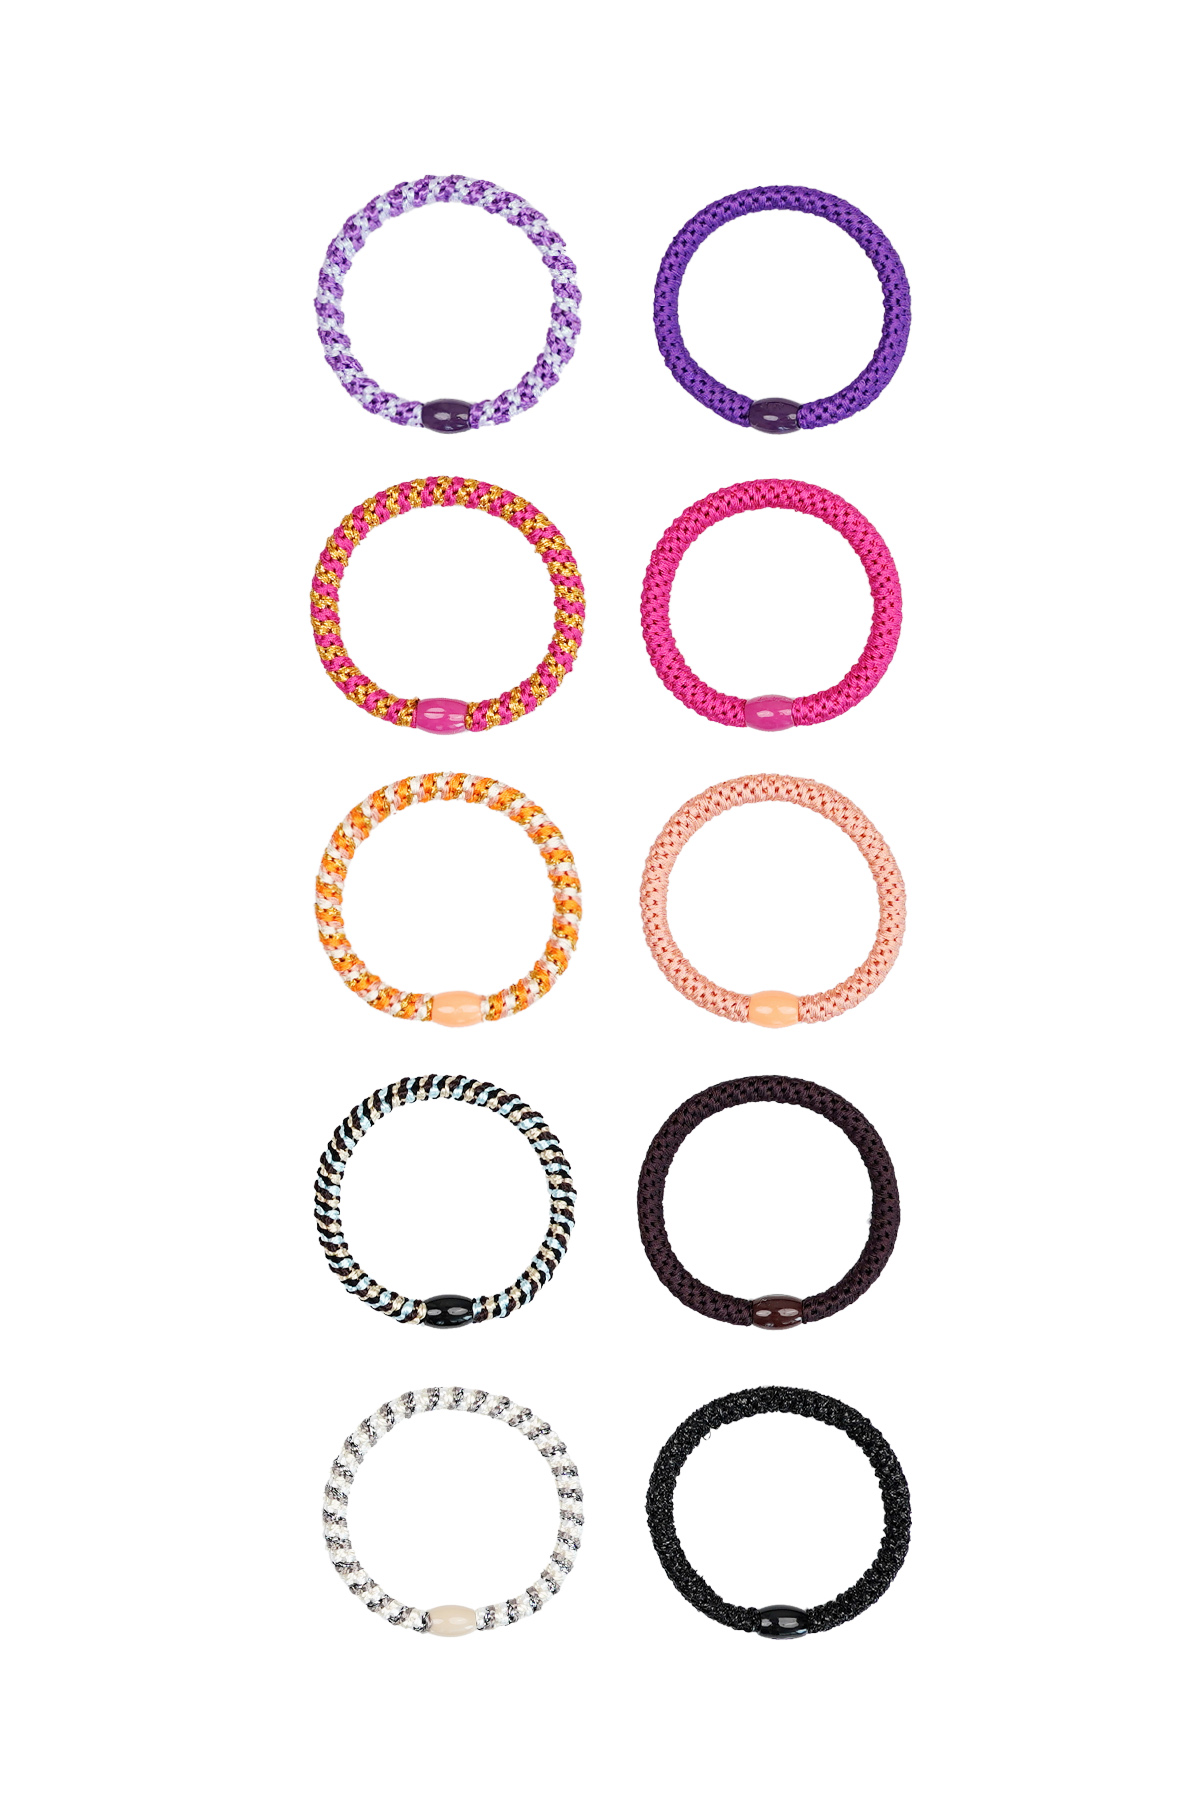 Hair elastic bracelets box basic and colorful - multi